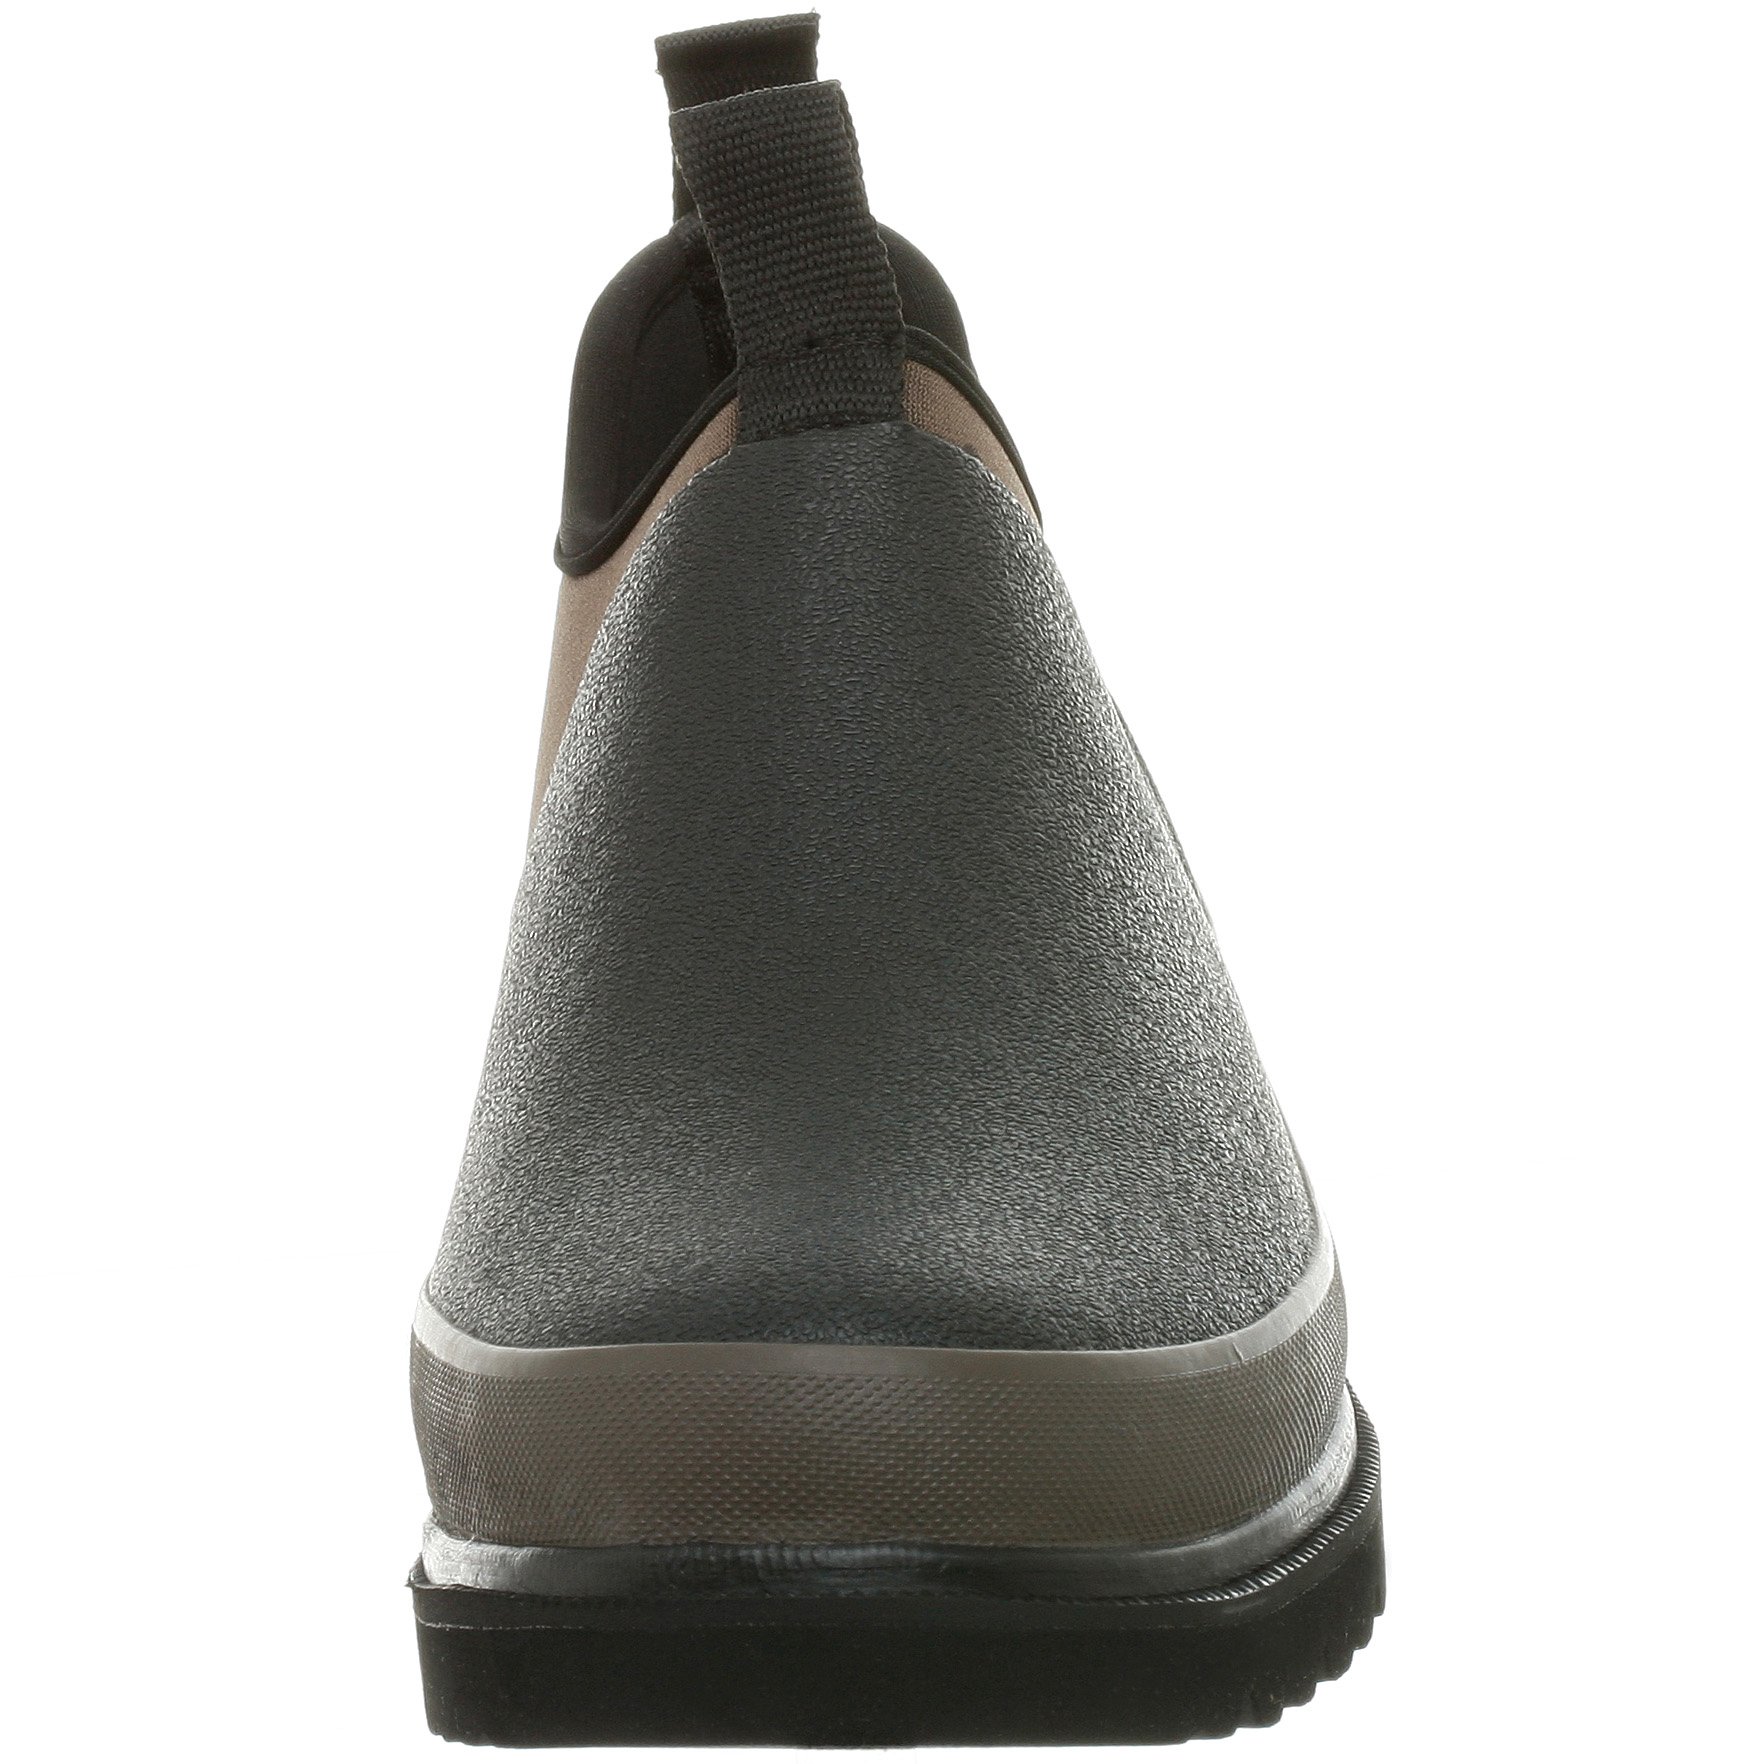 Bogs Men's Tillamook Bay Camo Slip On Waterproof Insulated Shoe